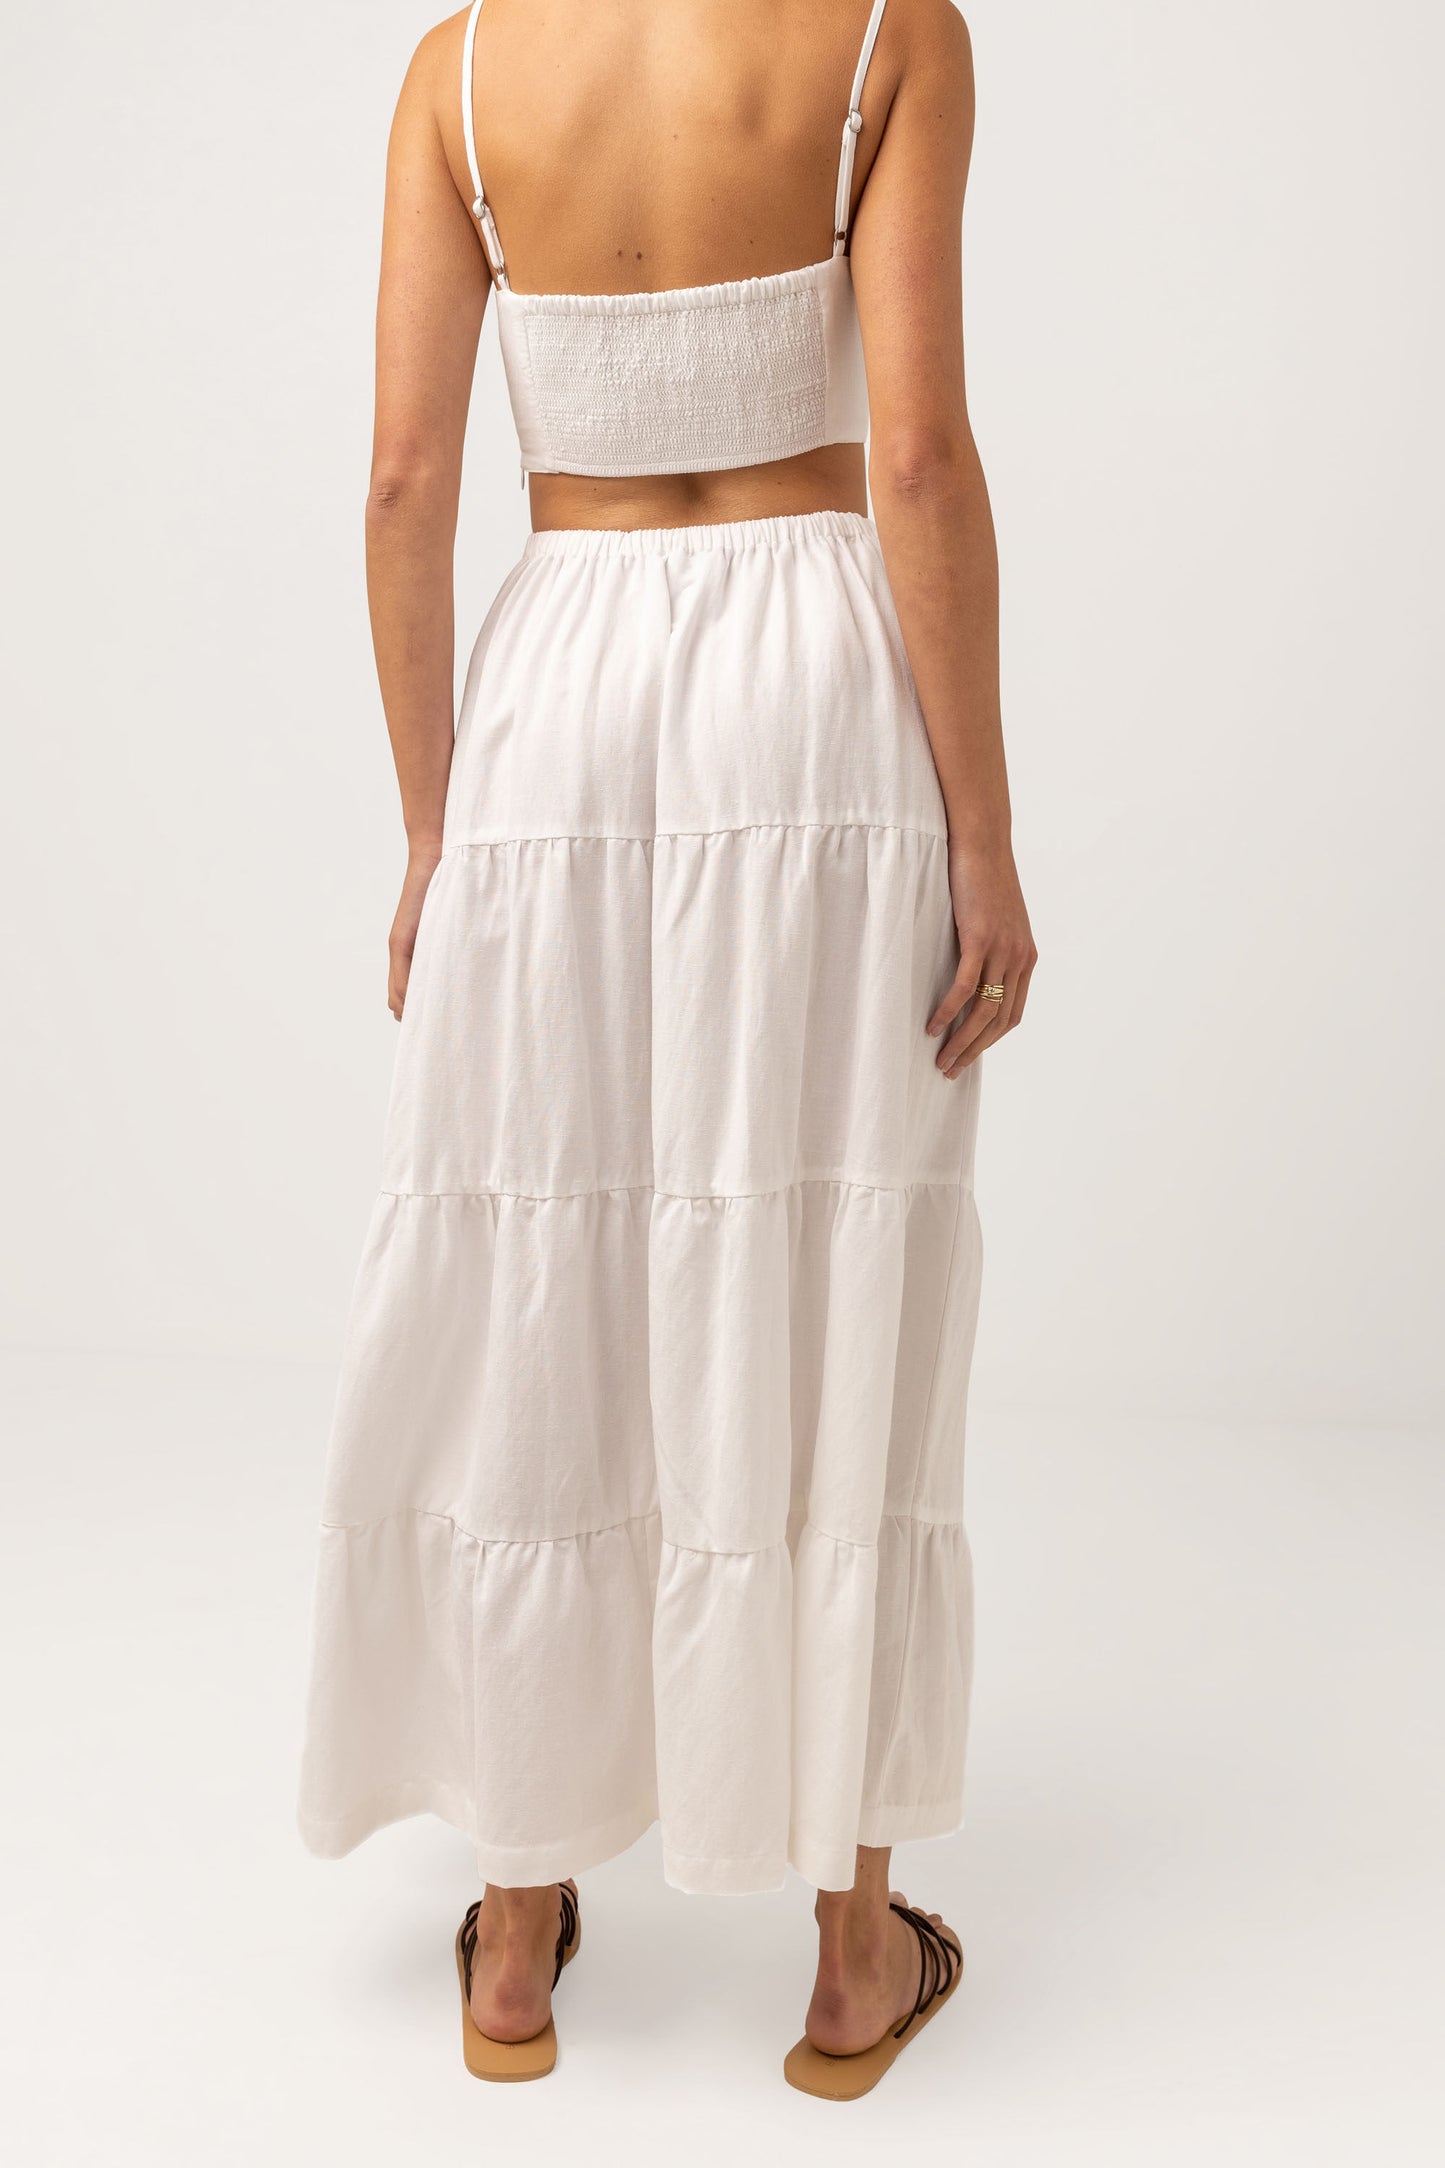 Villa Tiered Maxi Skirt in White by Rhythm